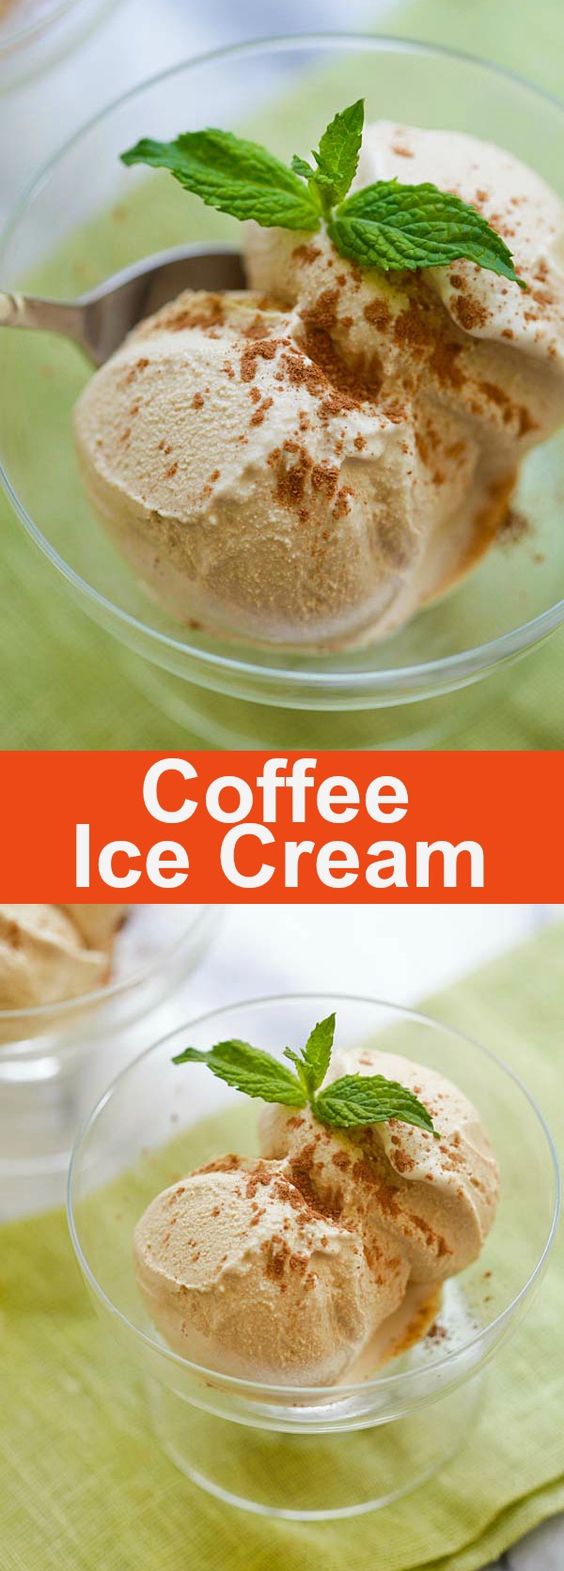 Coffee Ice Cream - the creamiest and richest coffee ice cream recipe. Super easy and yields amazing and fragrant homemade ice cream | rasamalaysia.com